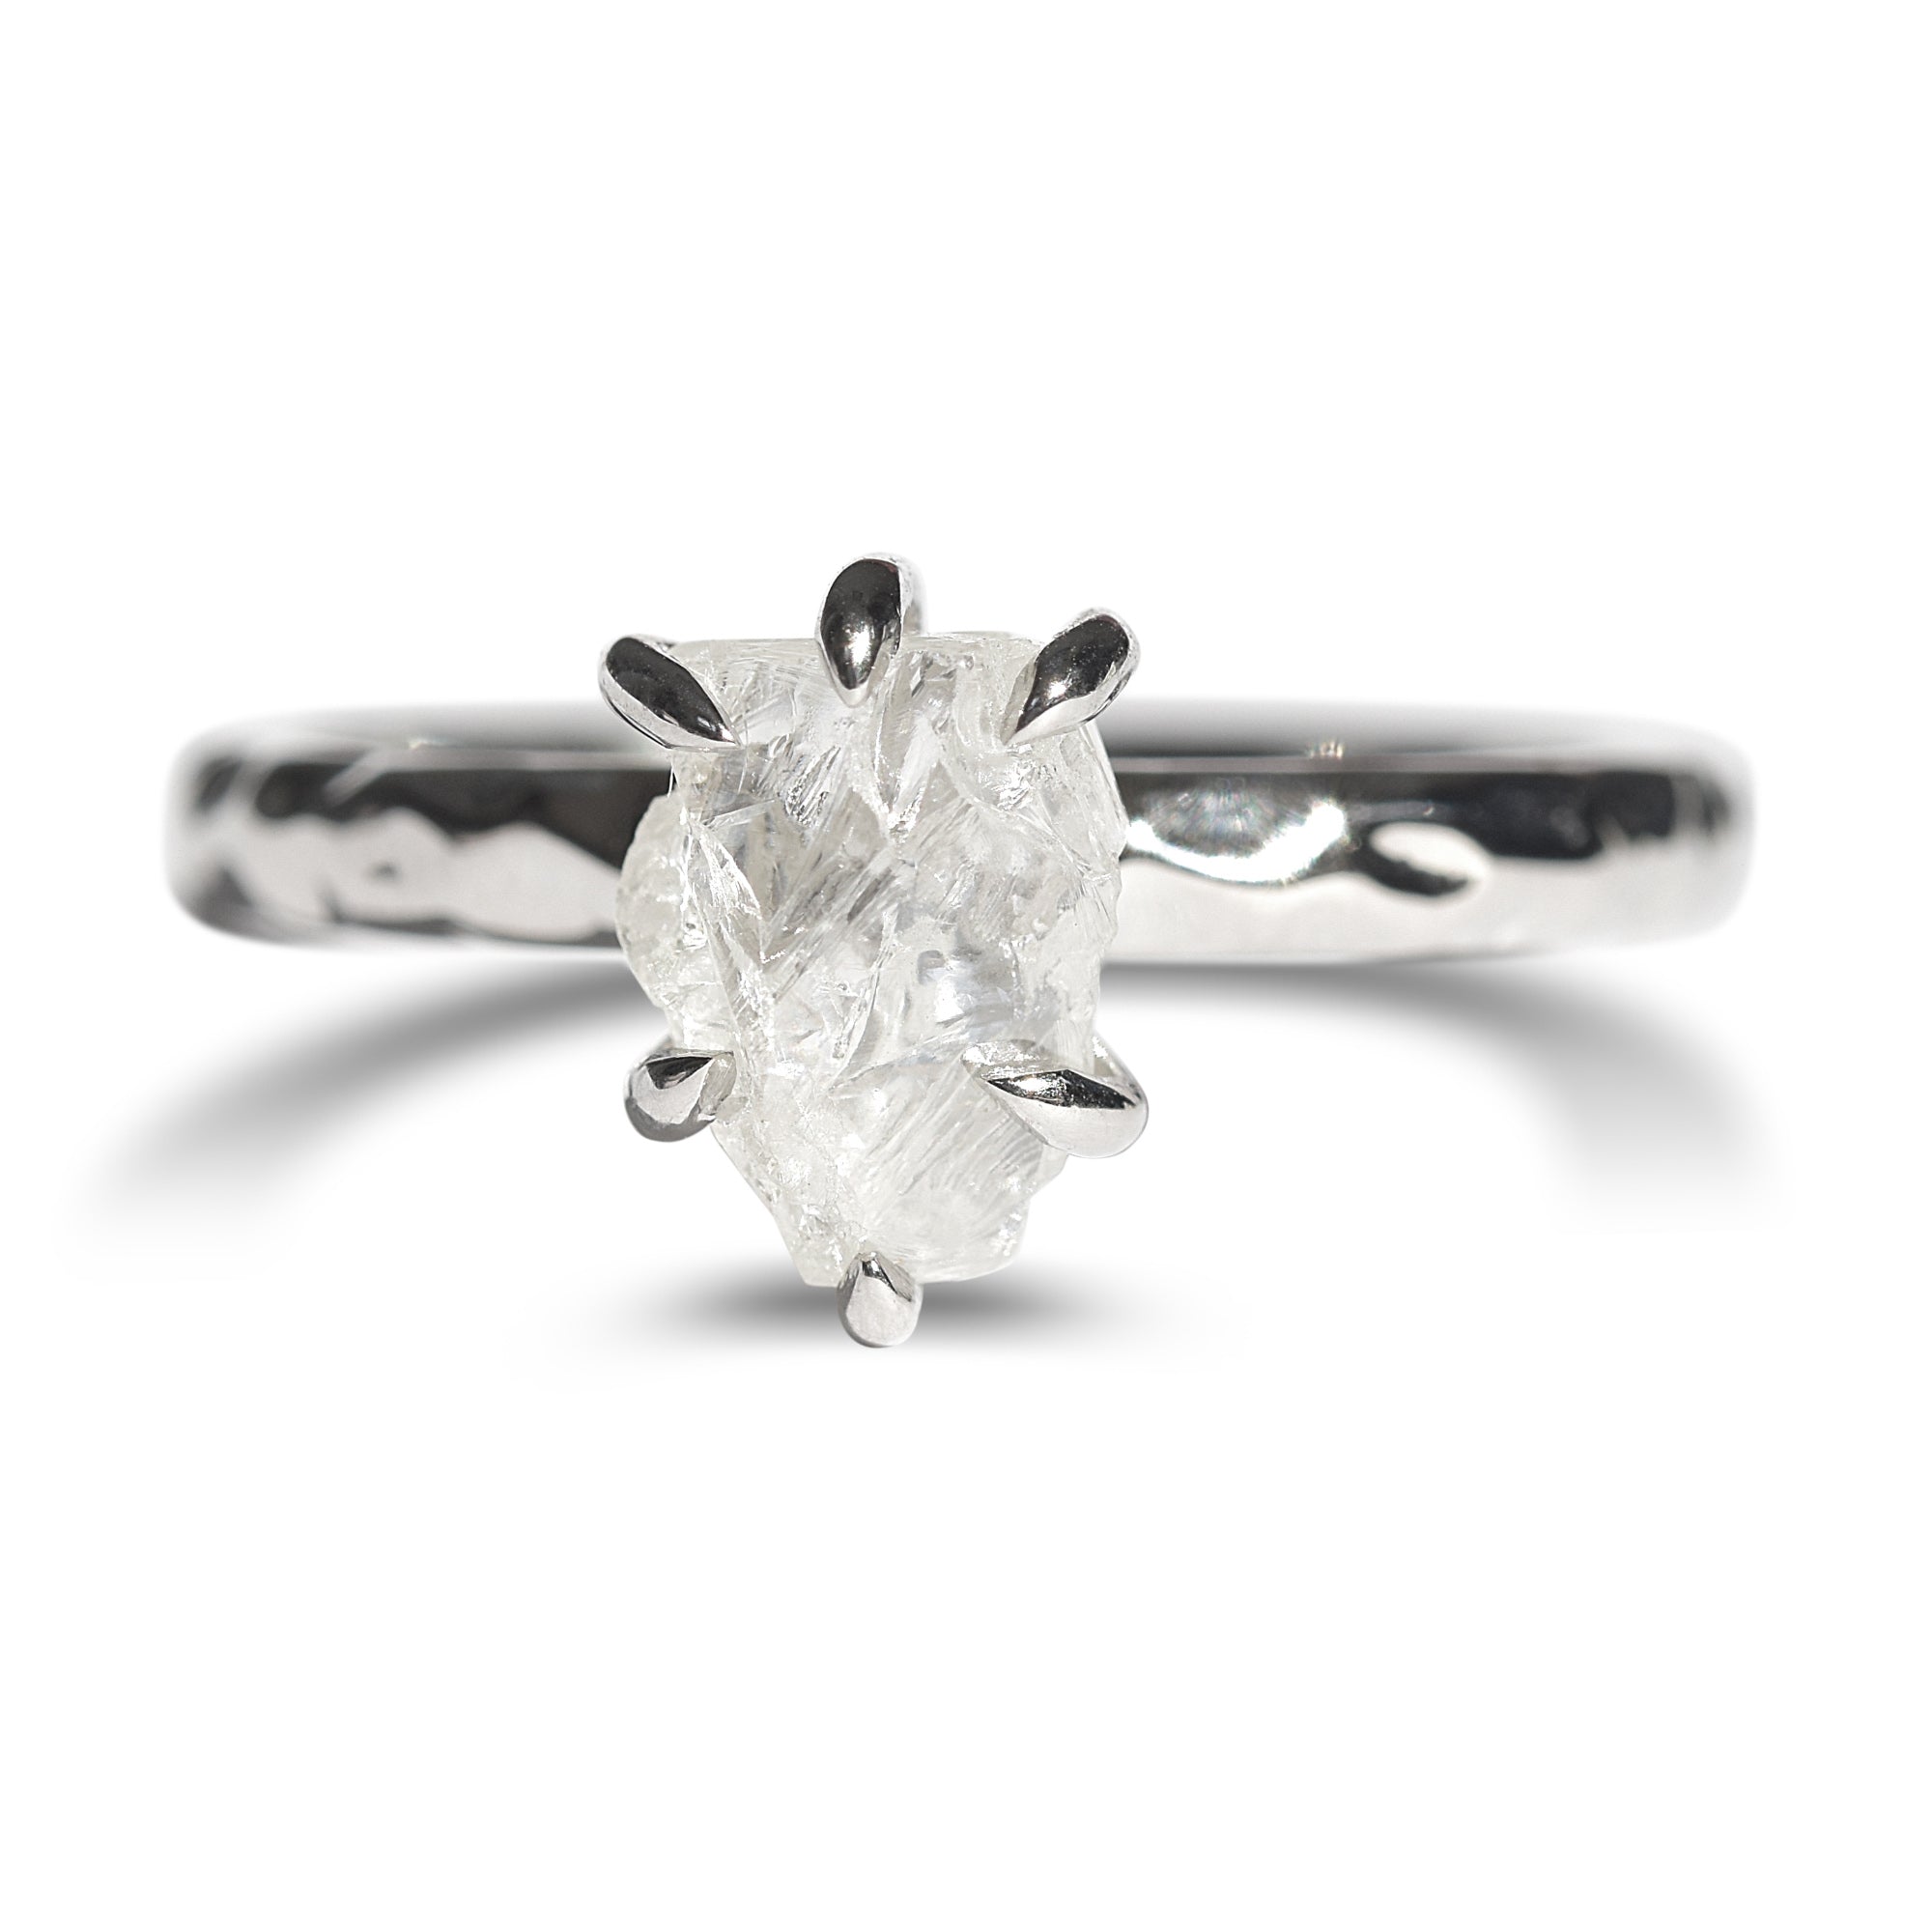 Buy Raw Diamond Ring, Natural Diamond Ring, Unique Wedding Ring, Raw Stone  Ring, Real Gemstone Minimalist Rings, Dainty Gemstone Rings, RINGS Online  in India - Etsy